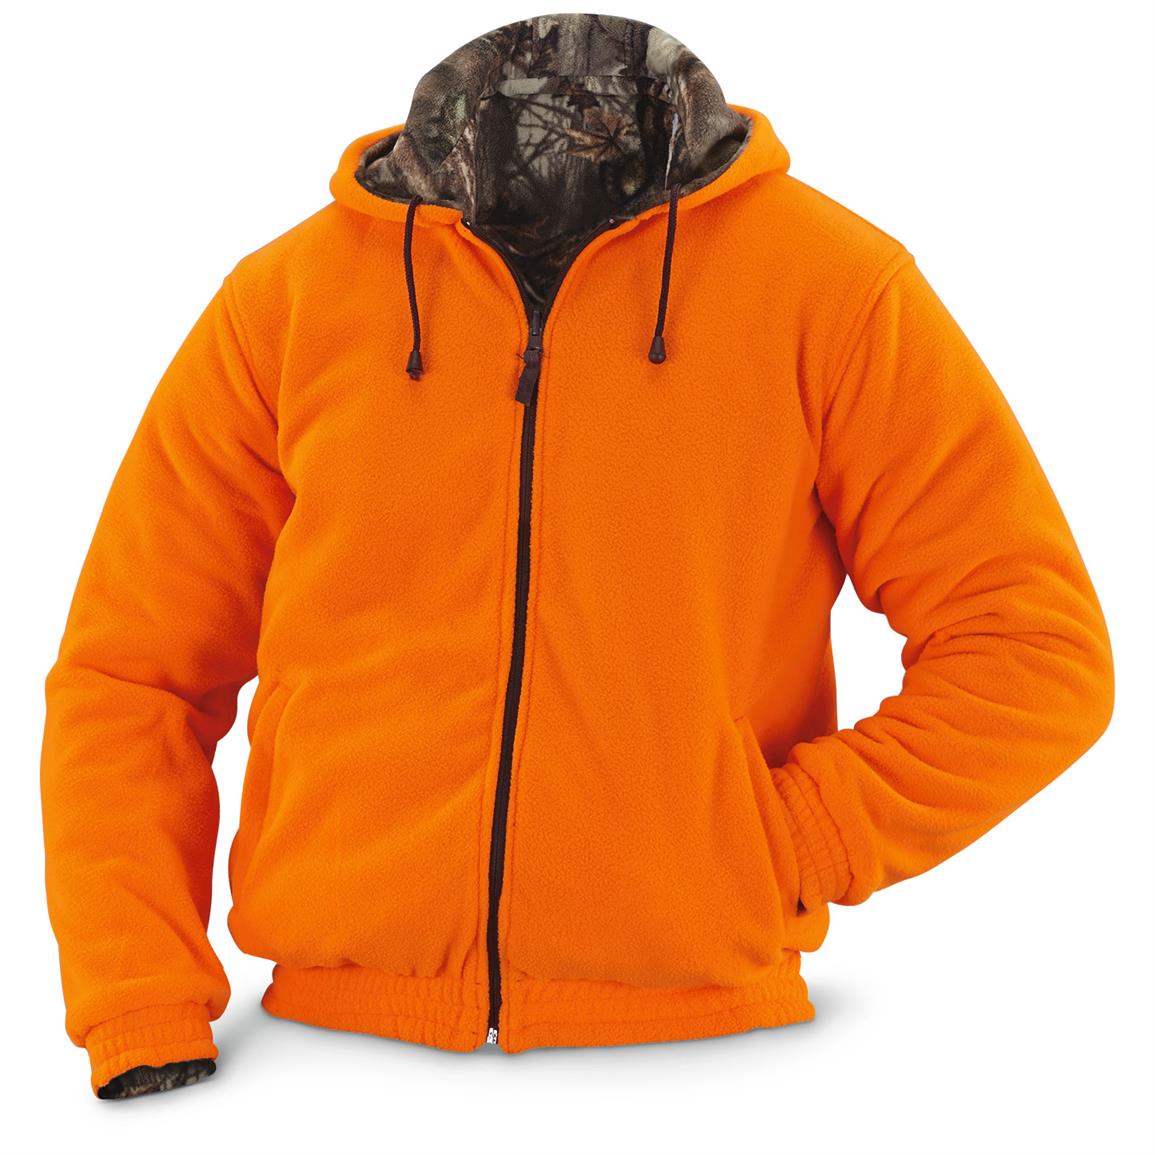 Reversible Fleece Jacket - 640778, Blaze Orange & Blaze Camo at ...